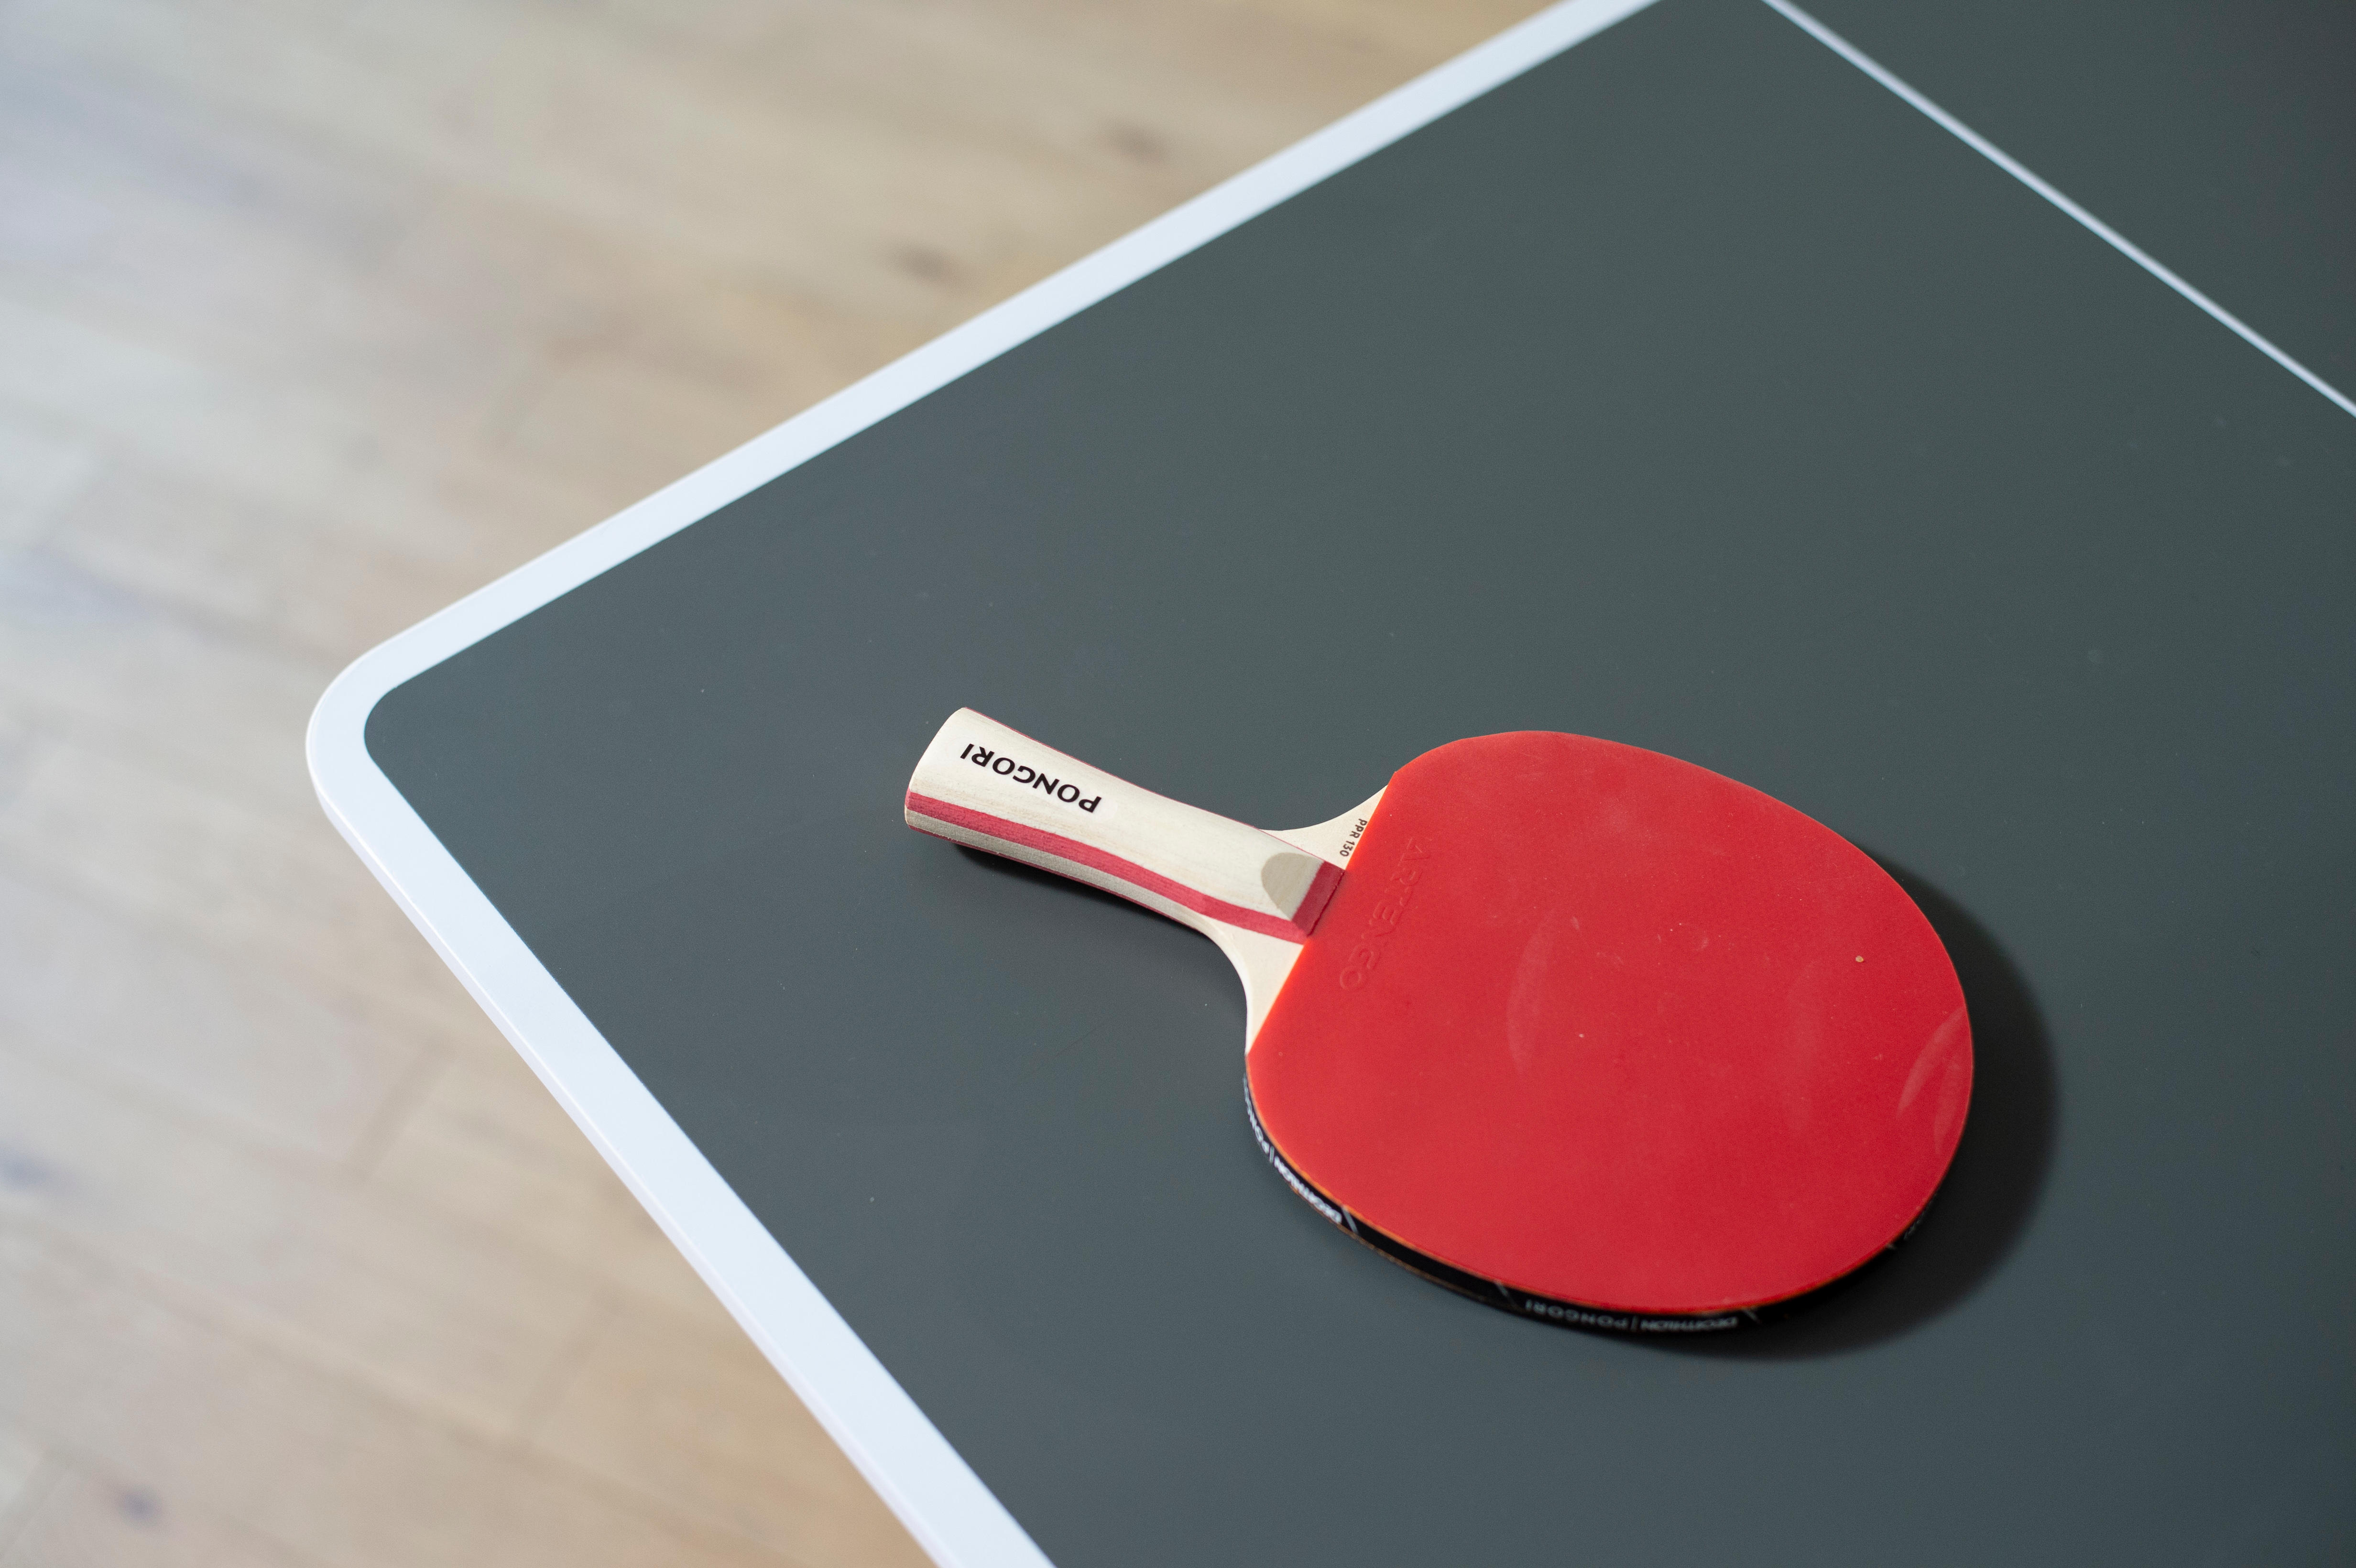 PPR 130 Table Tennis Set: 2 Paddles + 3 Balls - PONGORI